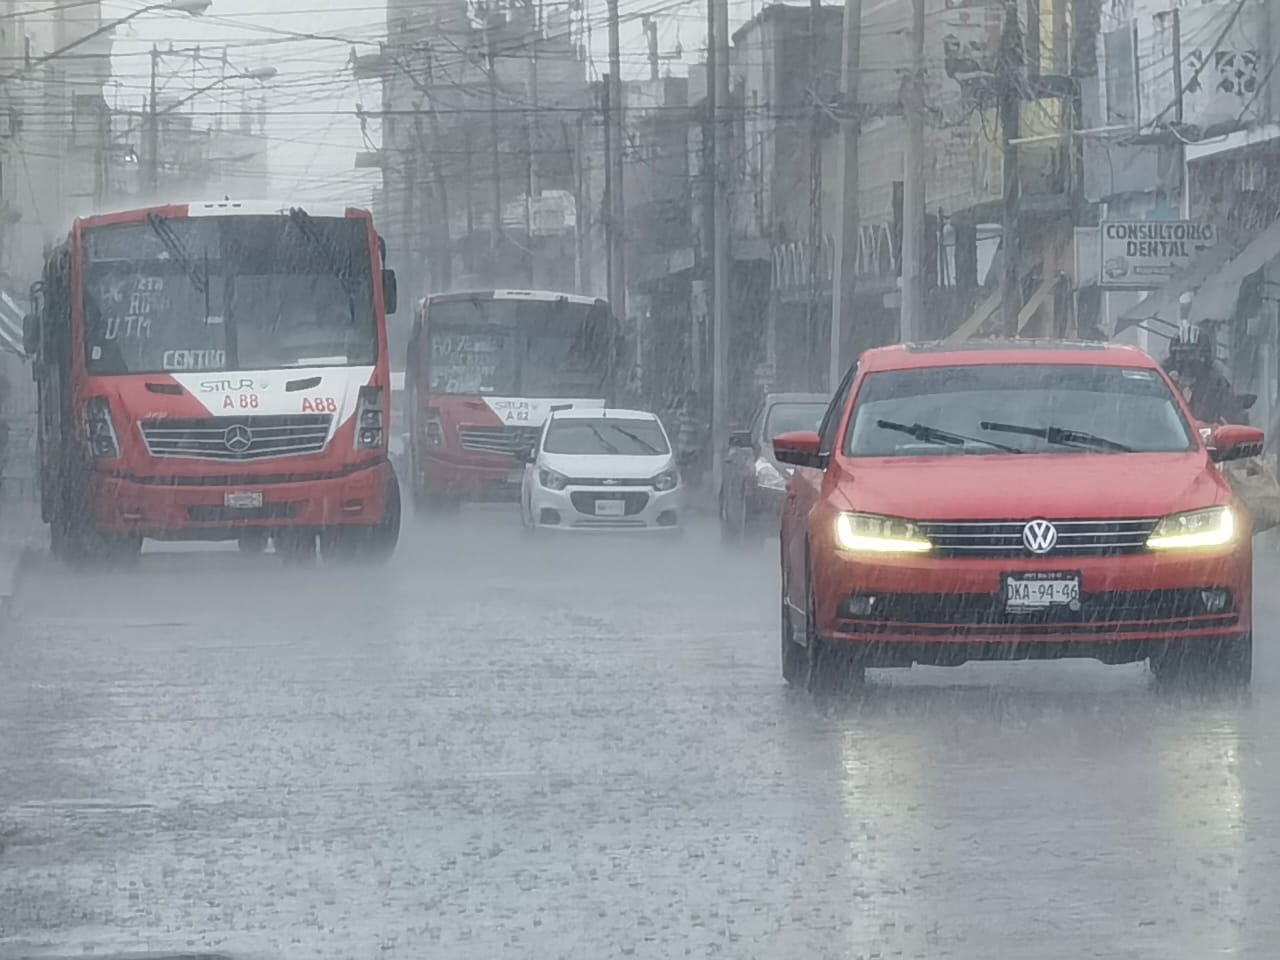 Onda Tropical número 17 continúa inundando las calles de Mérida: FOTOS